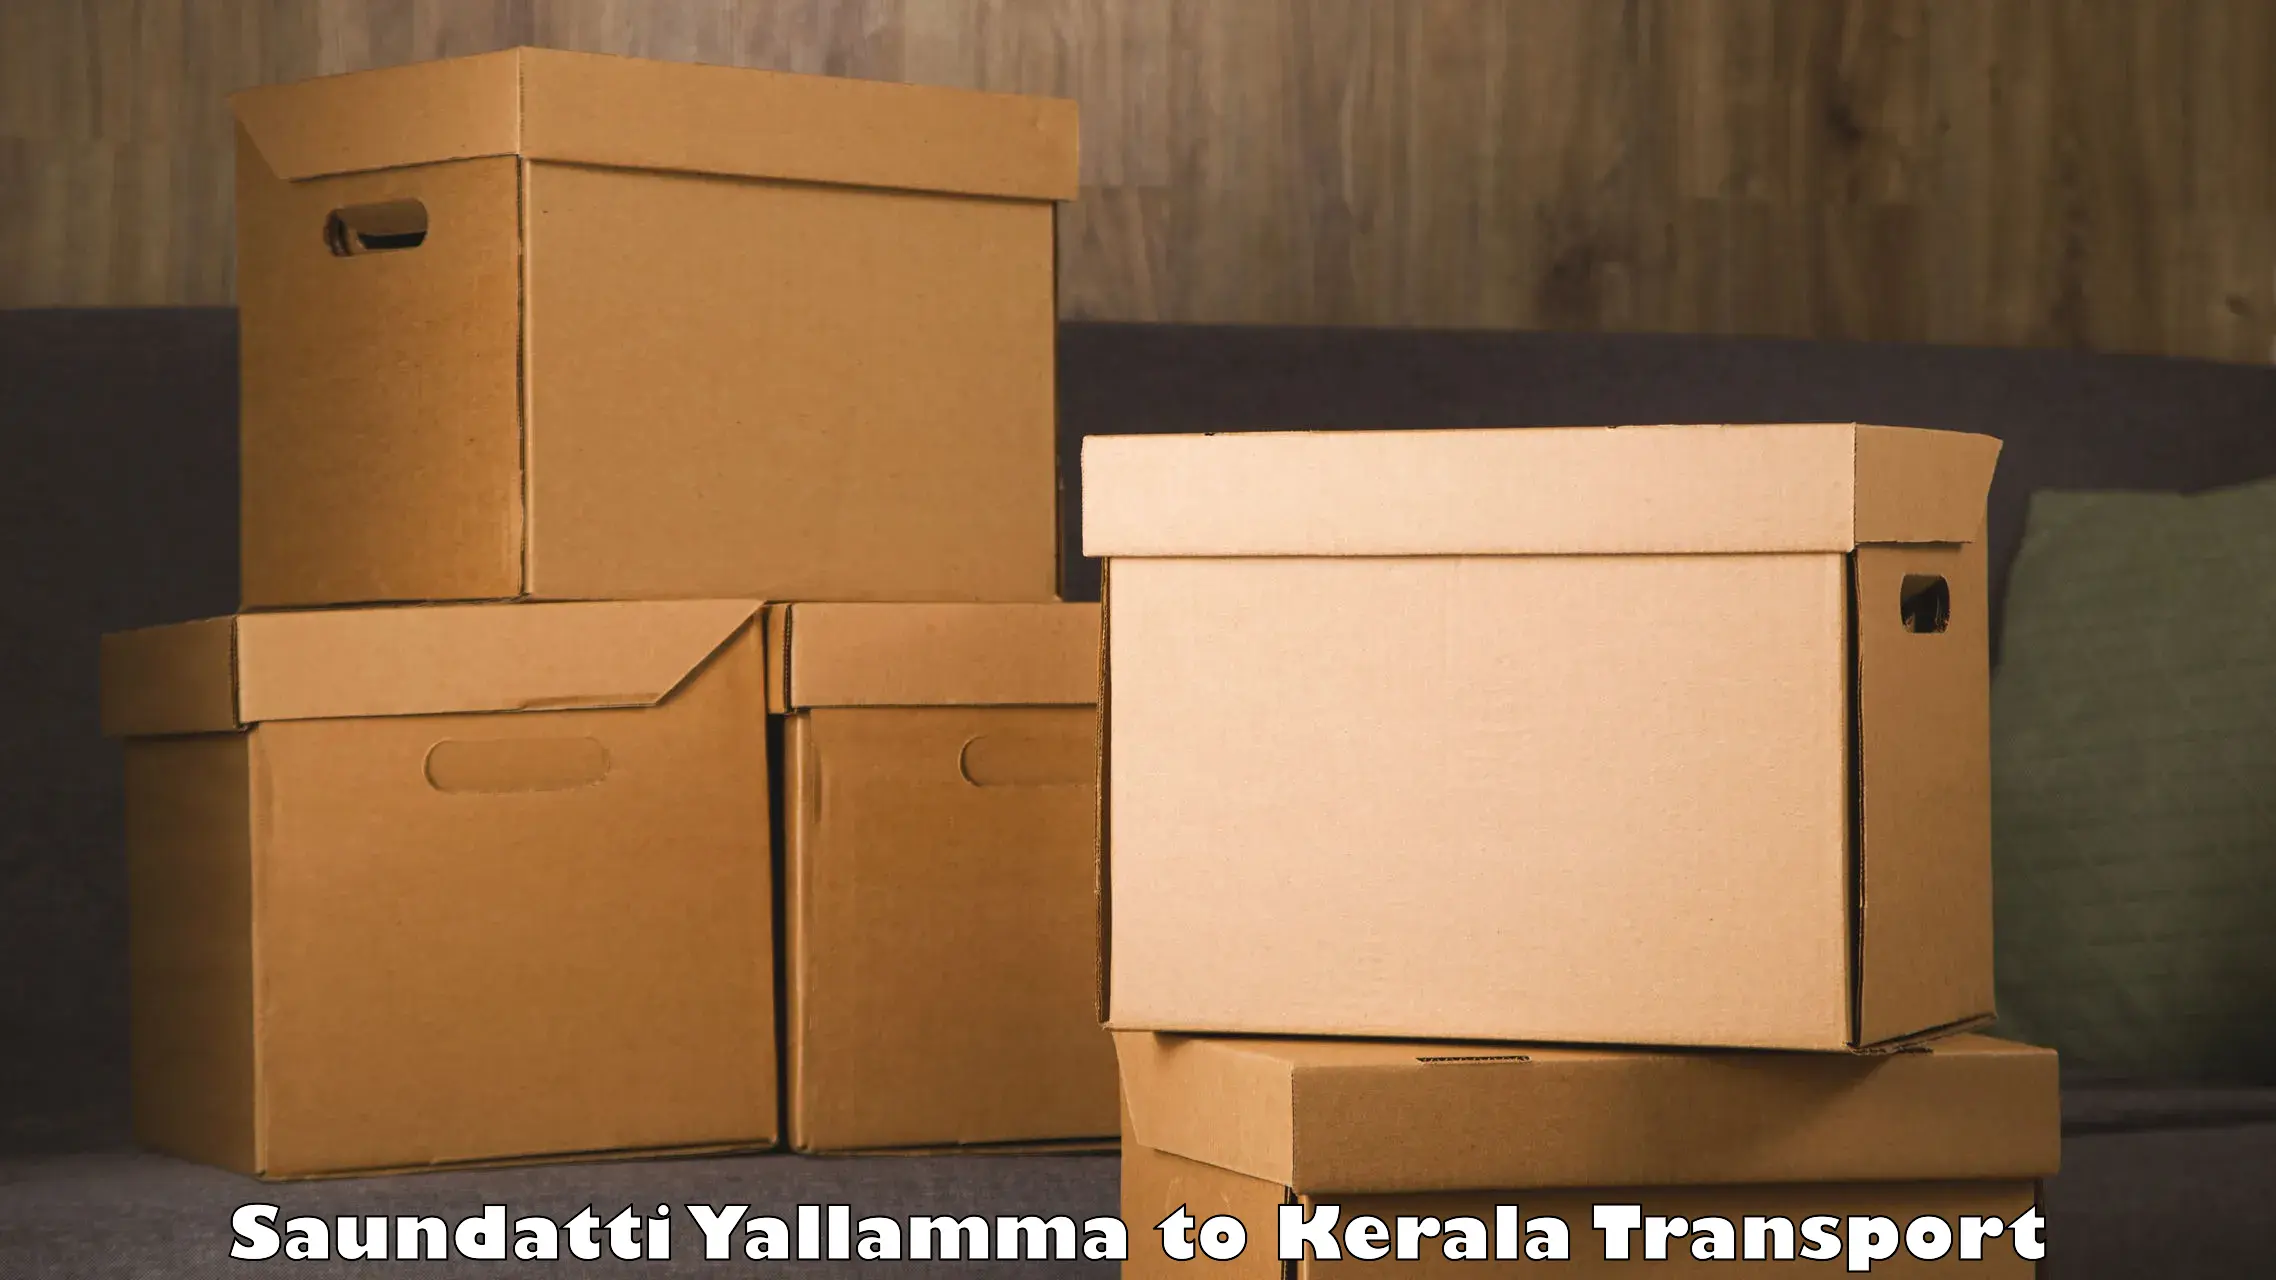 Truck transport companies in India Saundatti Yallamma to Kannur